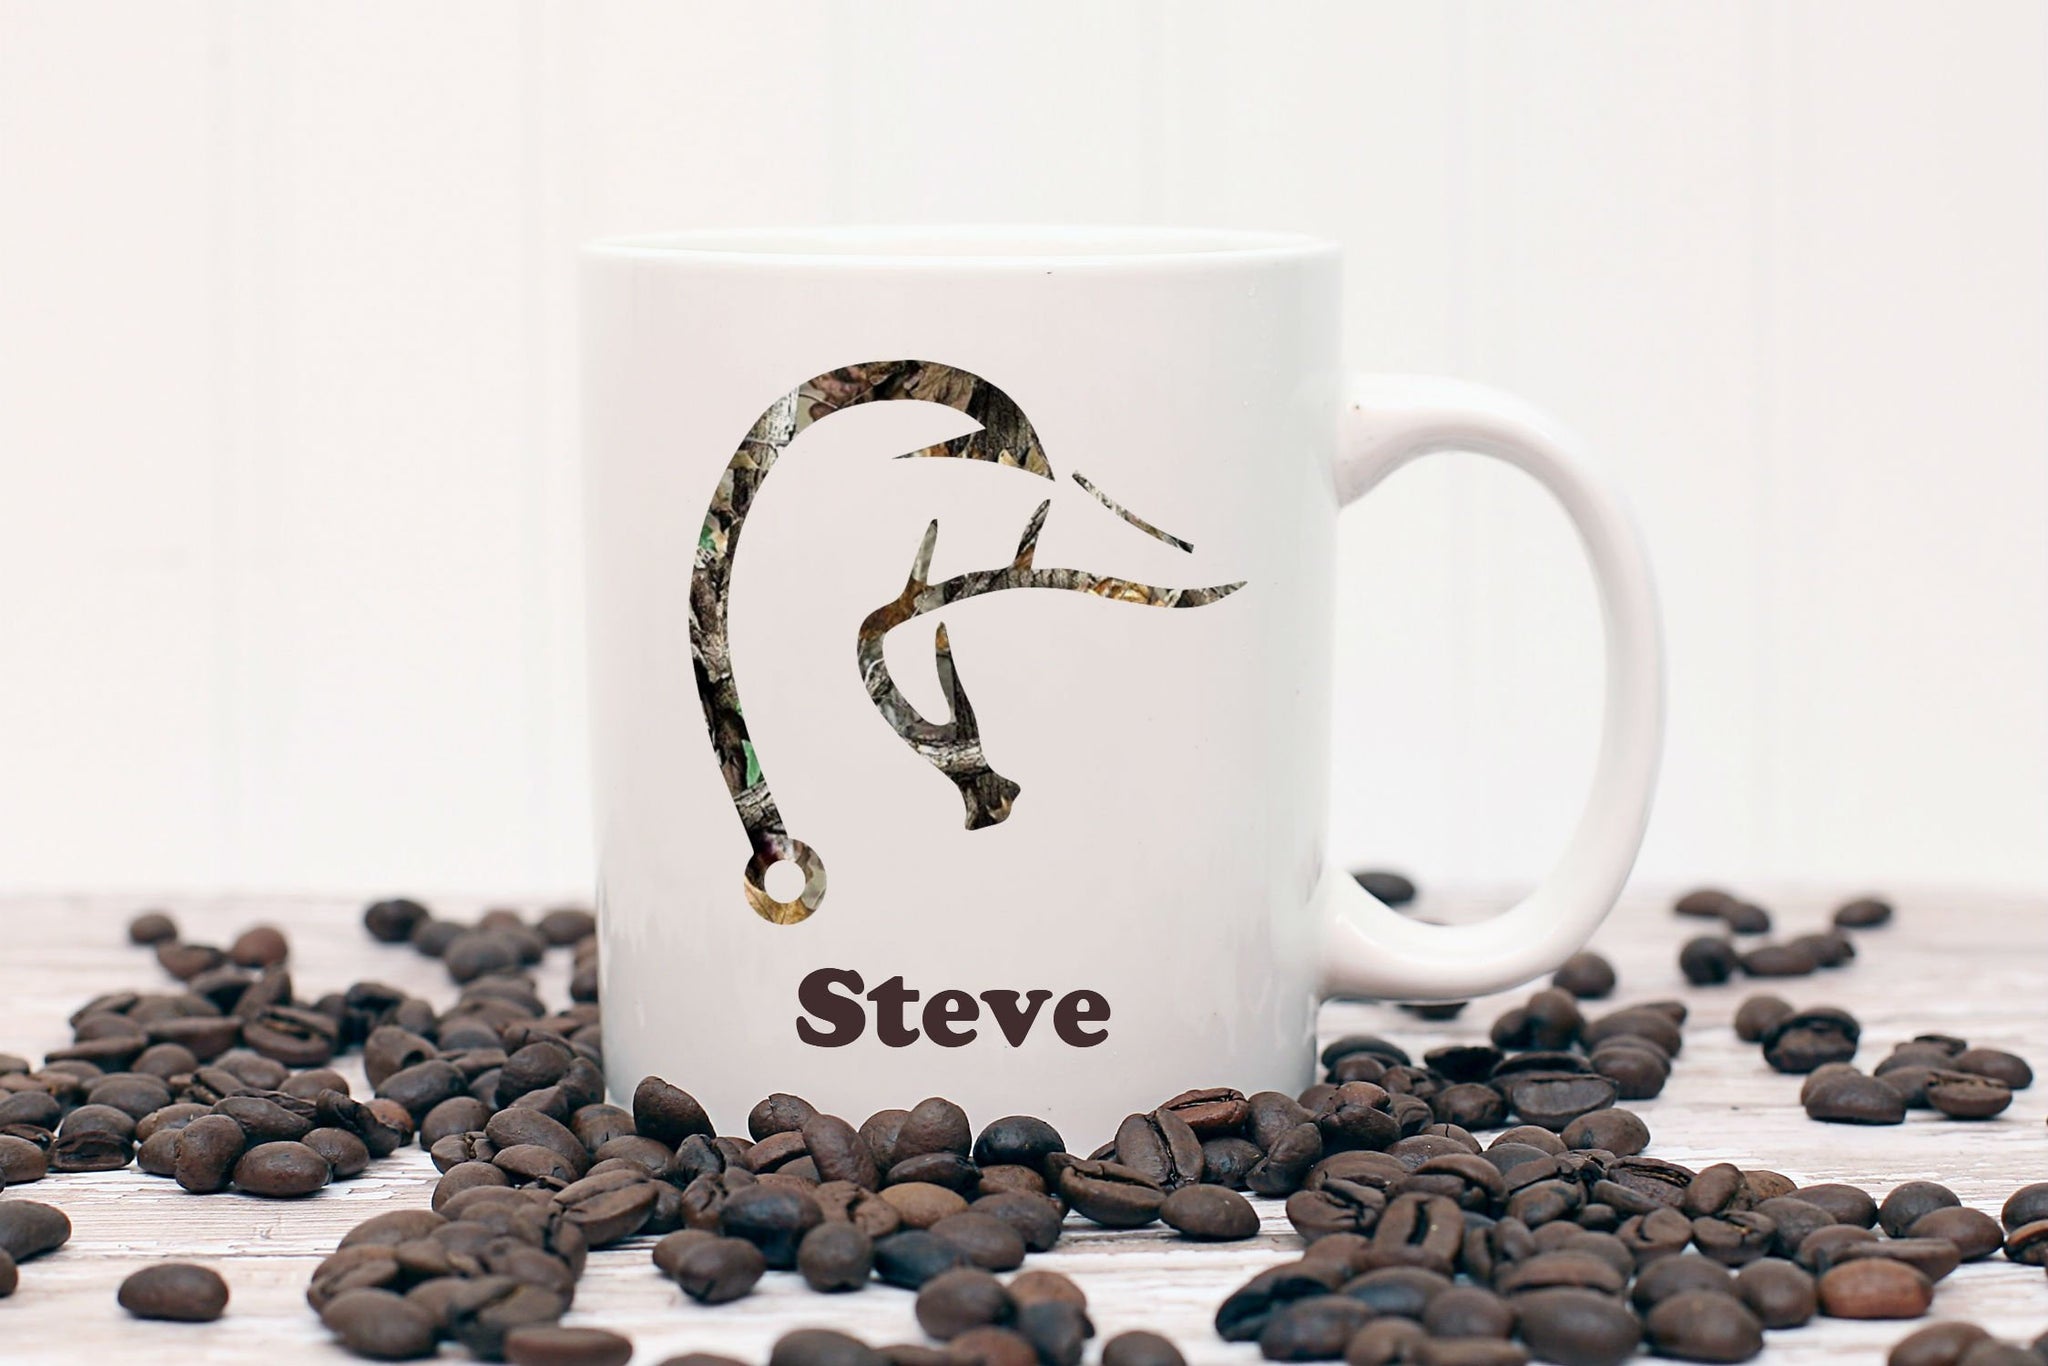 Personalized Camo Deer Hunting Stainless Steel Tumbler Coffee Mug